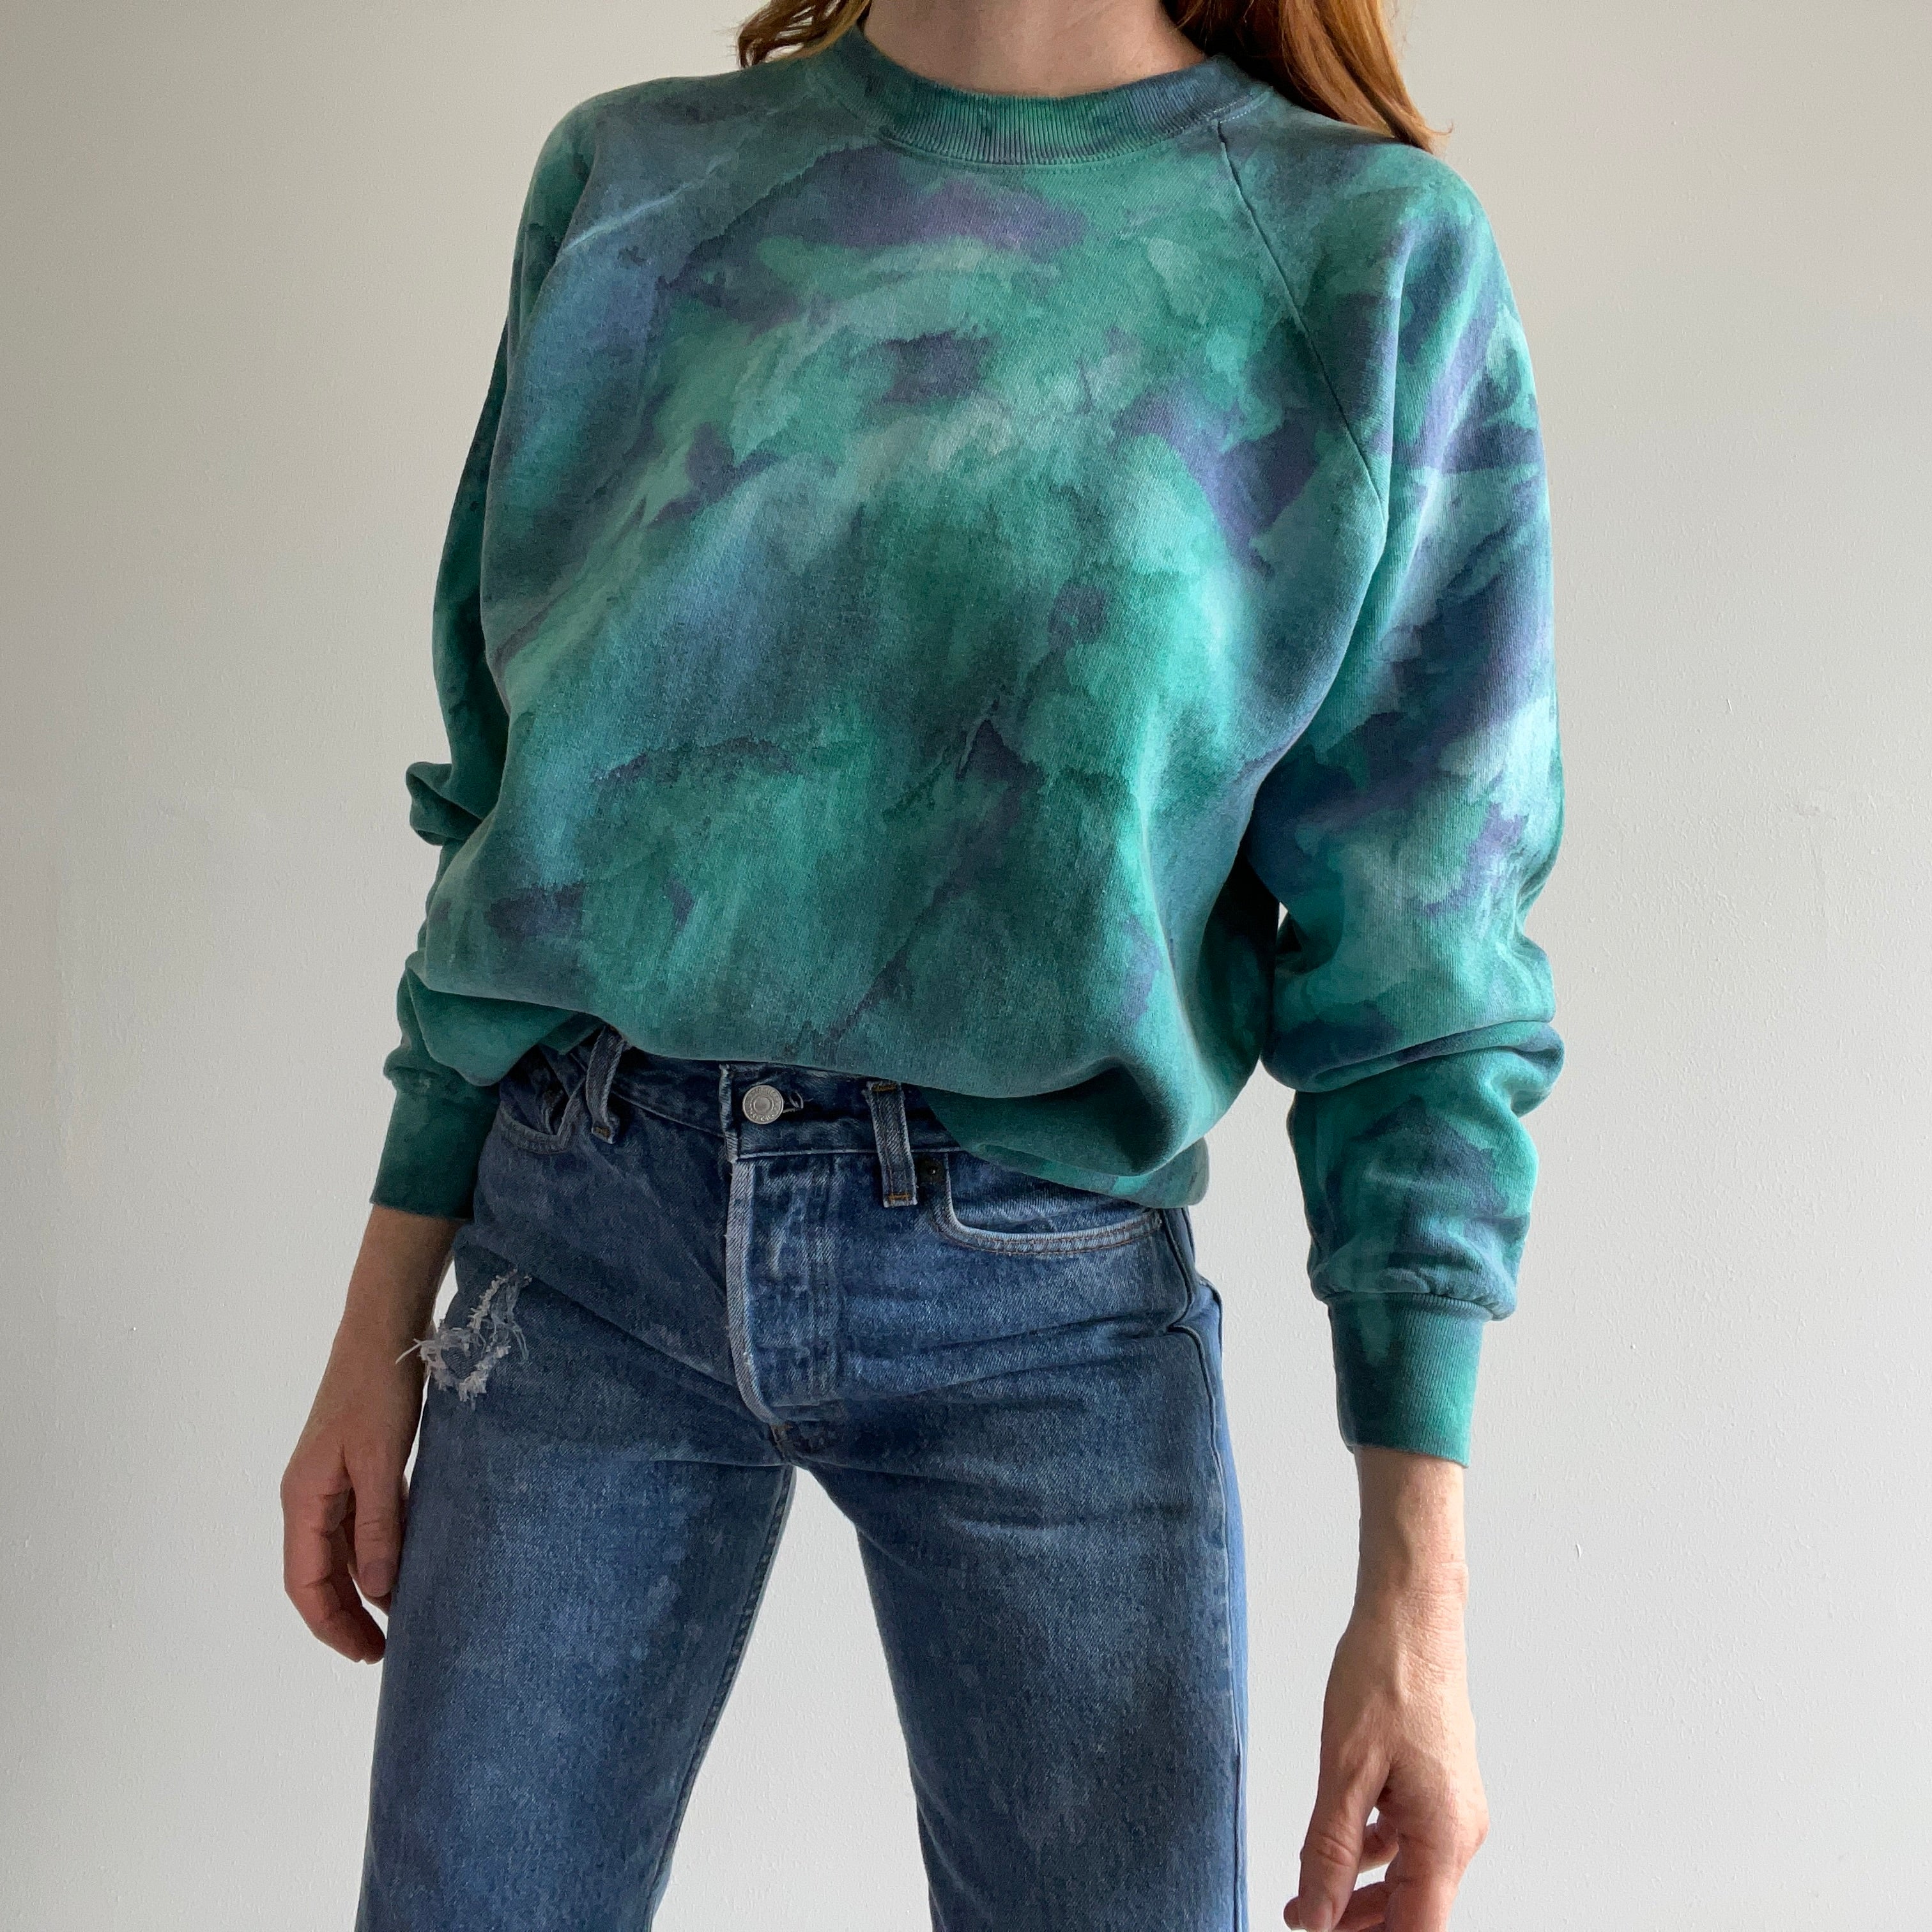 1990s Paint Swirl/Tie Dye Sweatshirt - Personal Collection